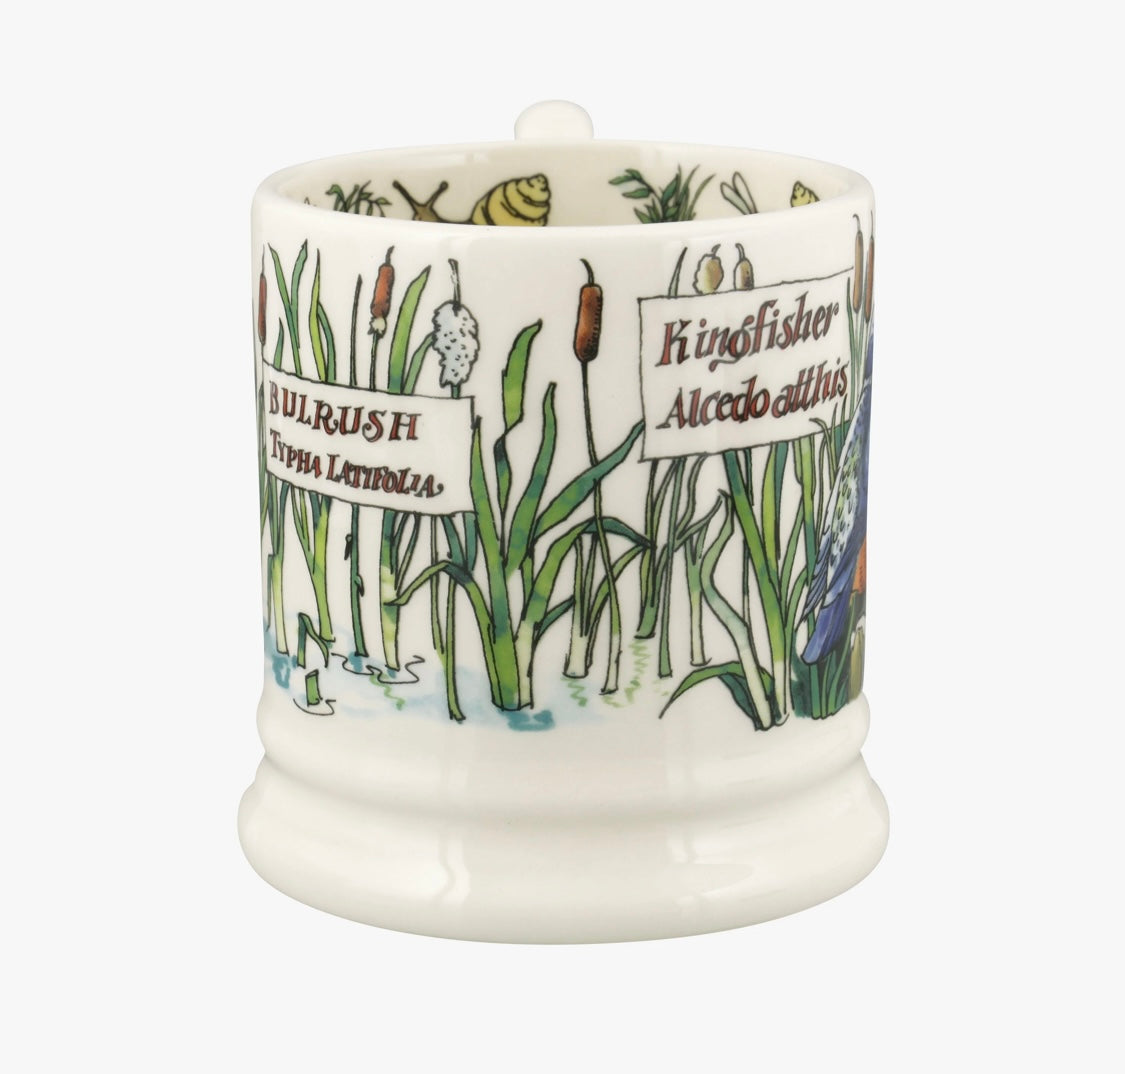 Kingfisher & Bulrush 1/2 Pint Mug